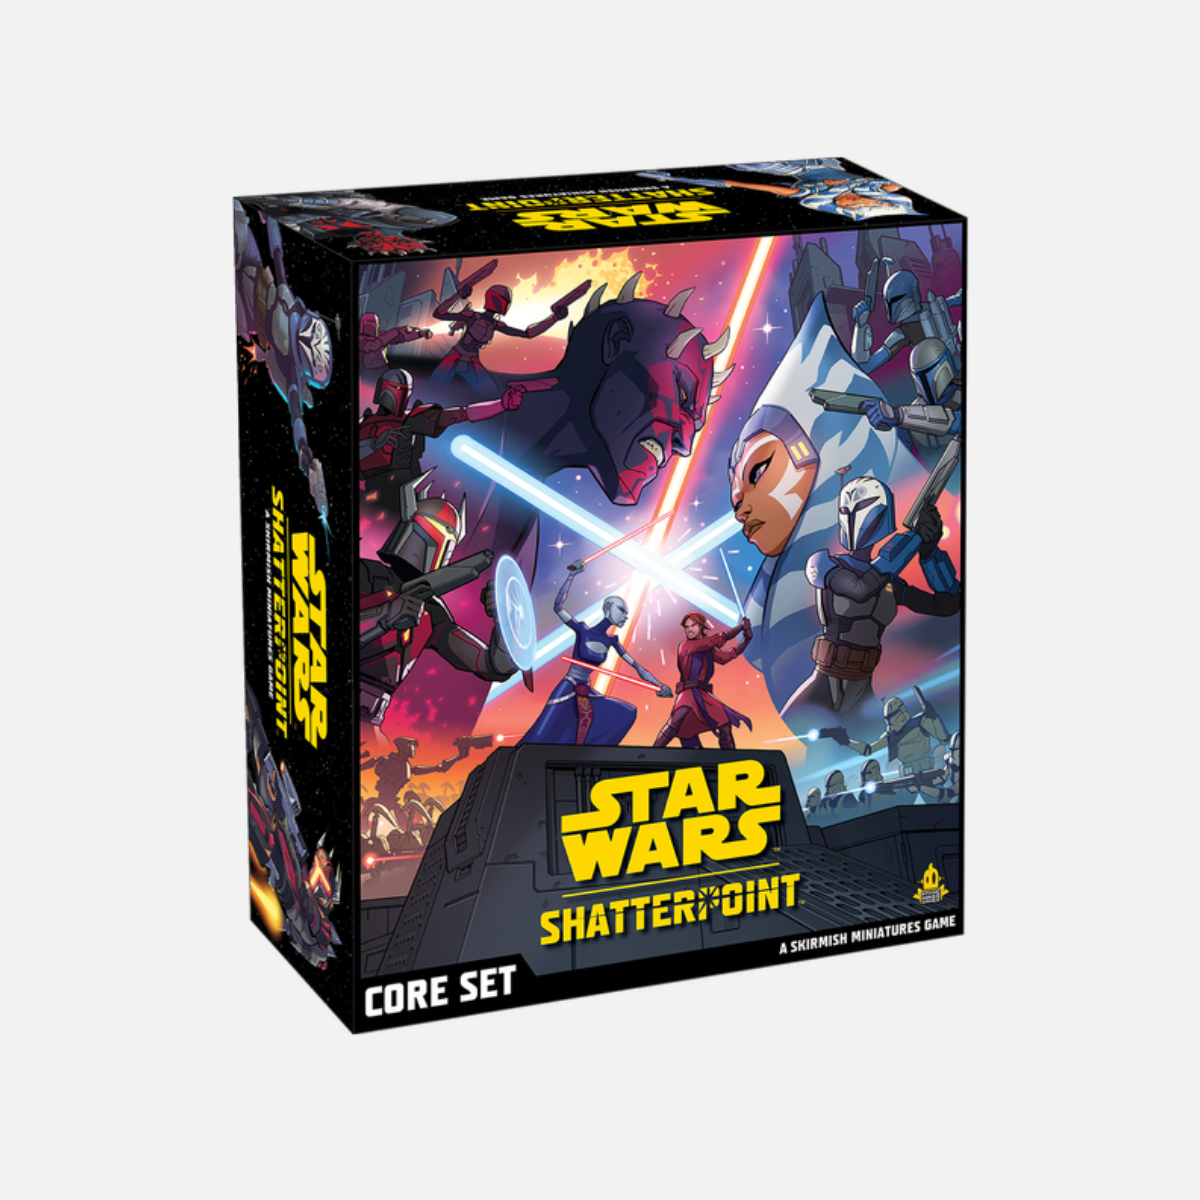 Star Wars Shatterpoint board game